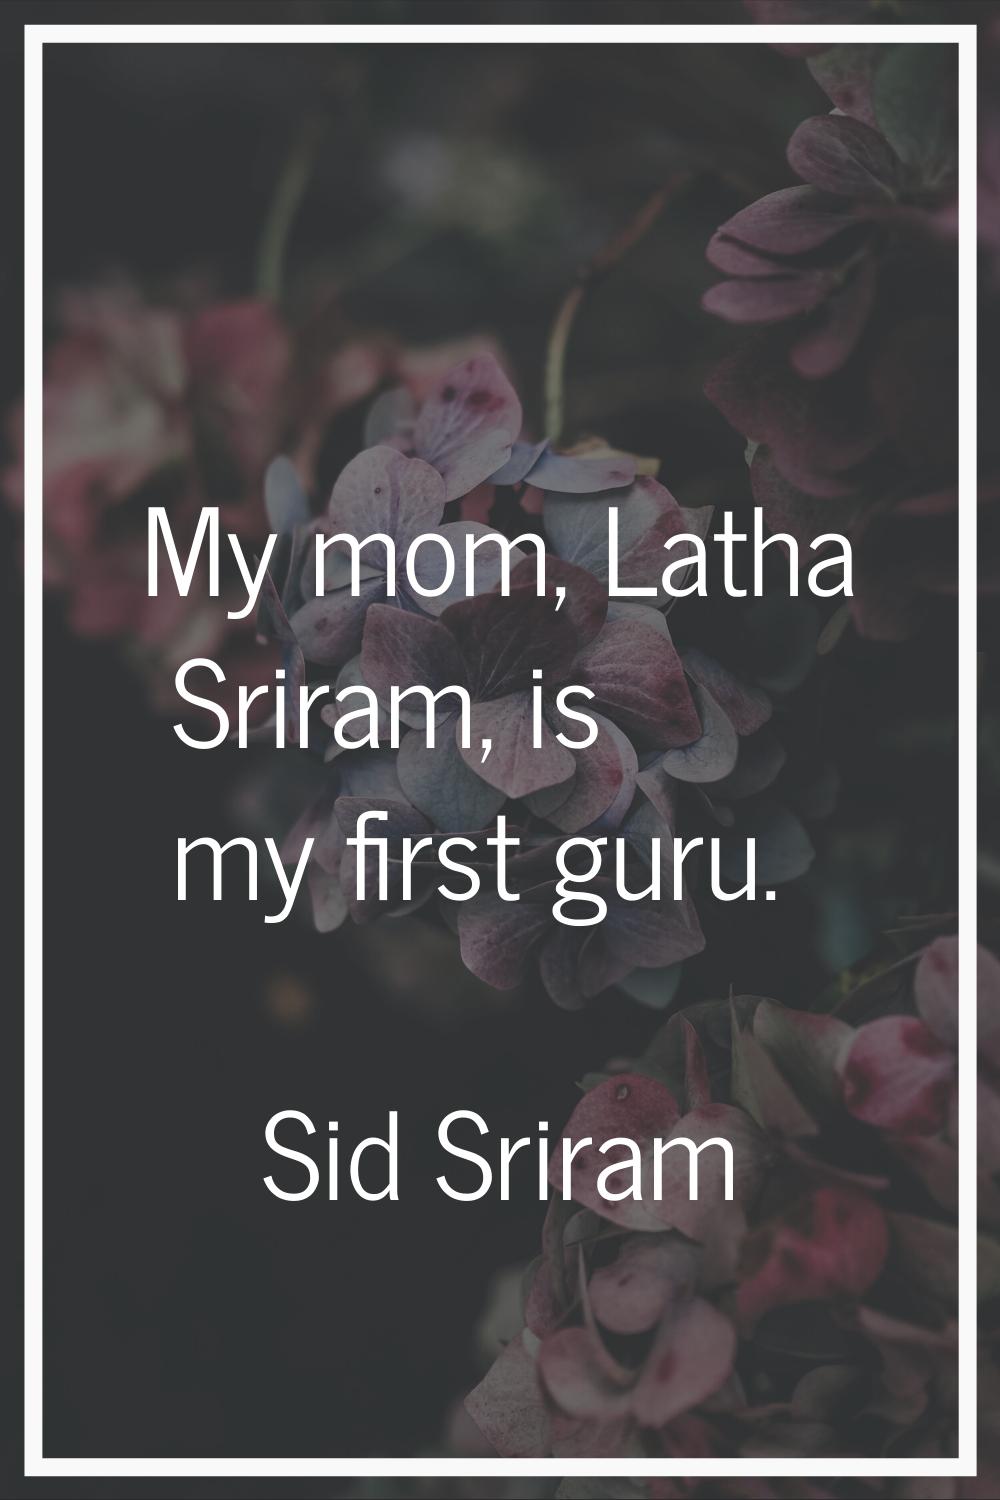 My mom, Latha Sriram, is my first guru.